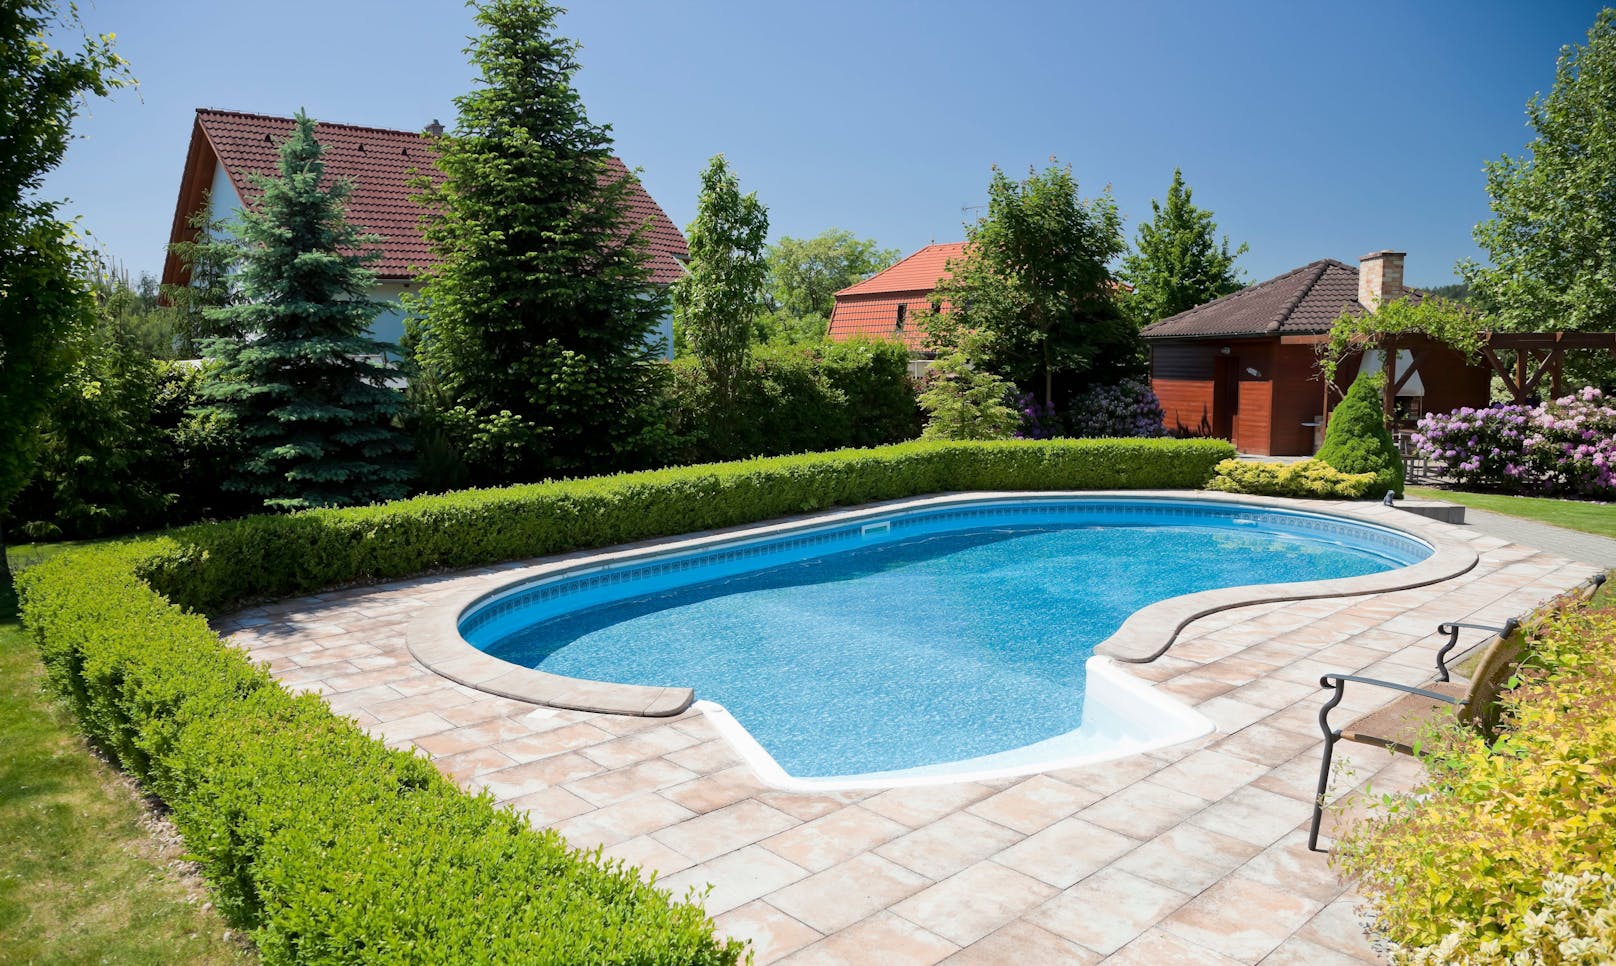 Swimmingpool im Garten (Symbolbild)